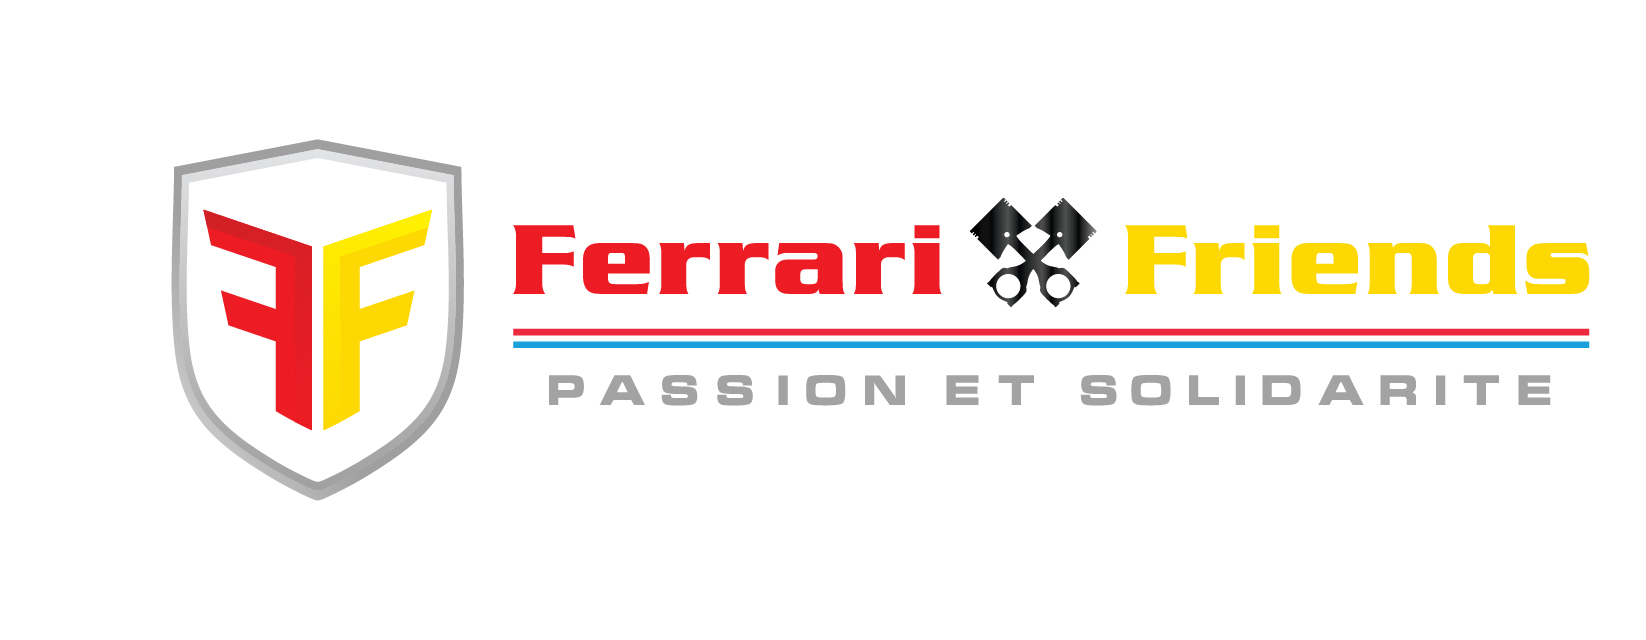 Ferrari and friends Luxembourg